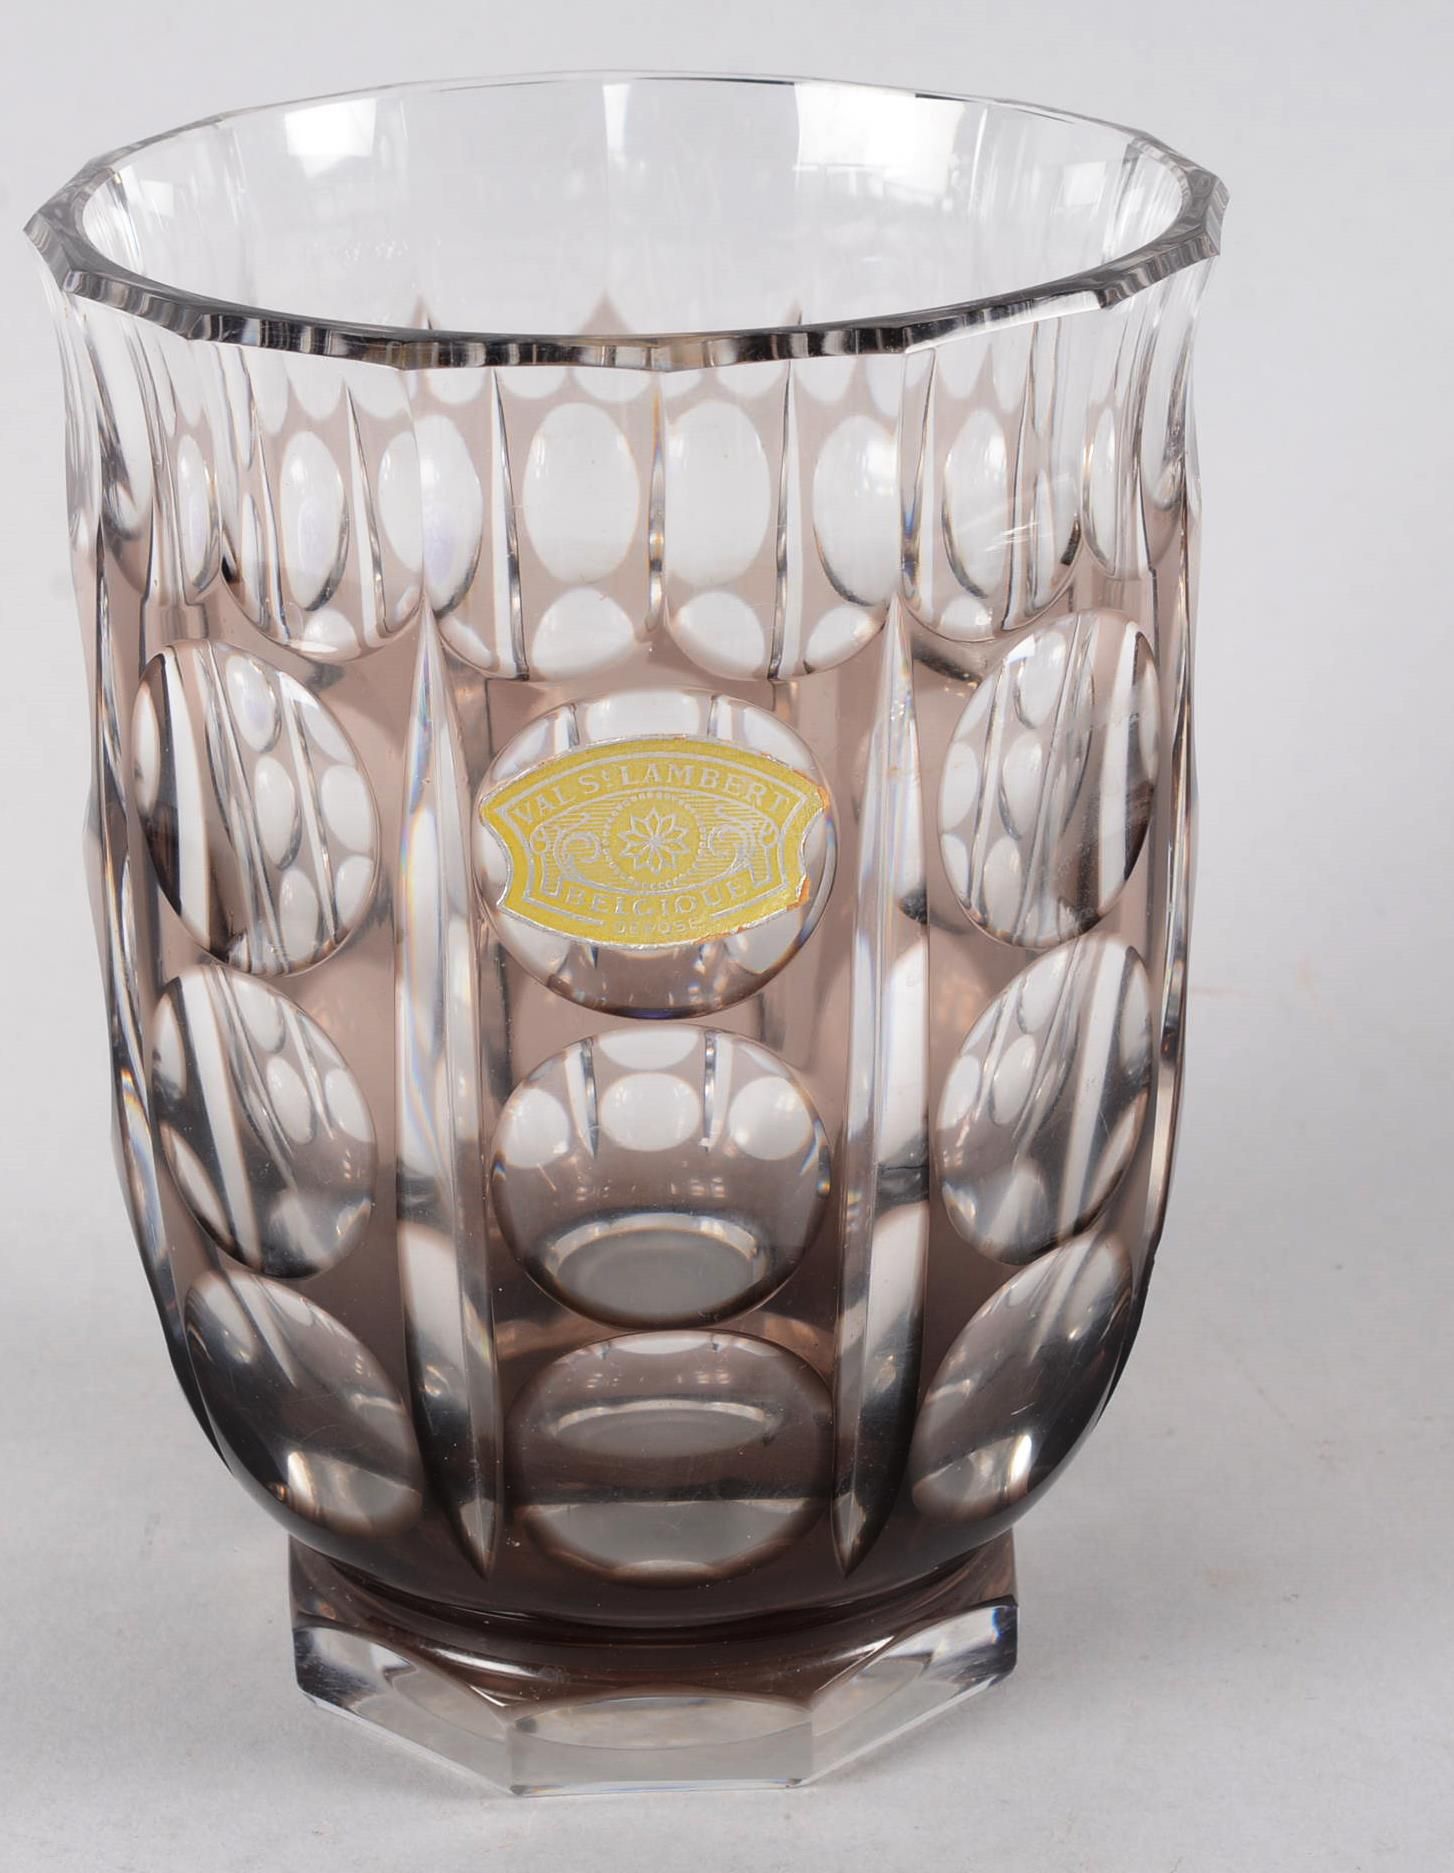 Vase en cristal taillé VAL SAINT LAMBERT

Vase aus Kristall, geschliffen mit kre&hellip;